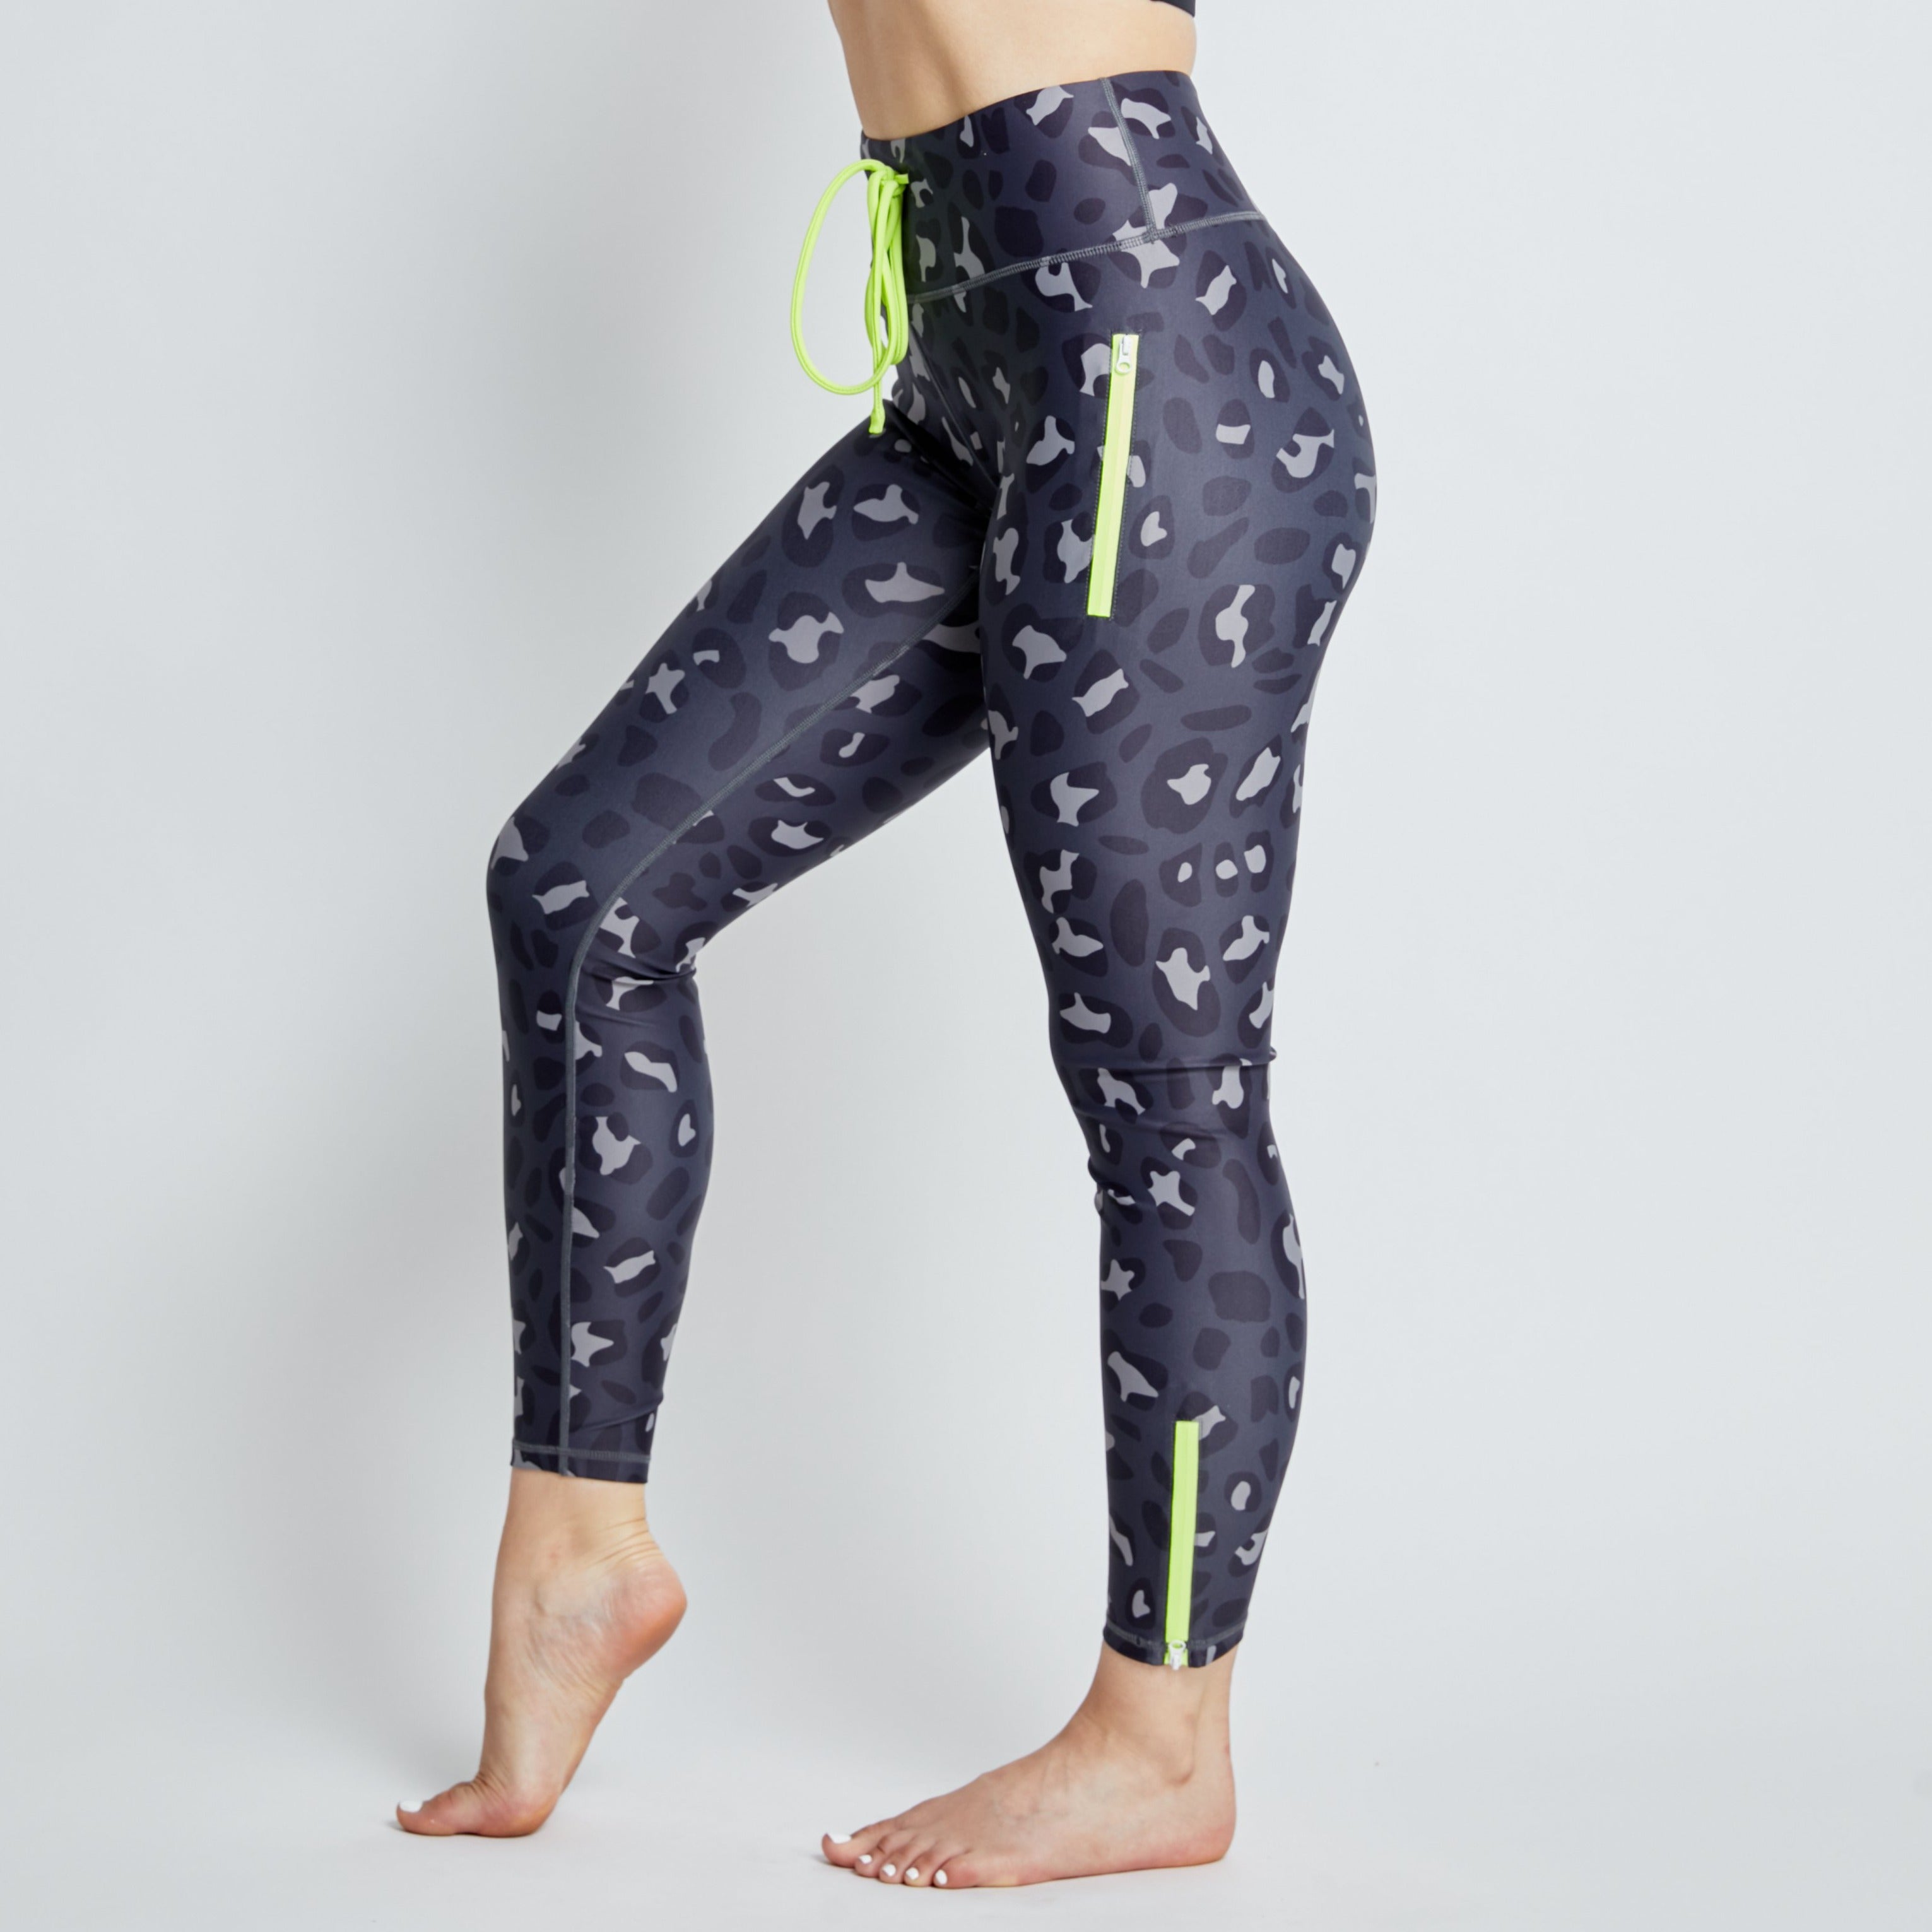  yoga pants for running